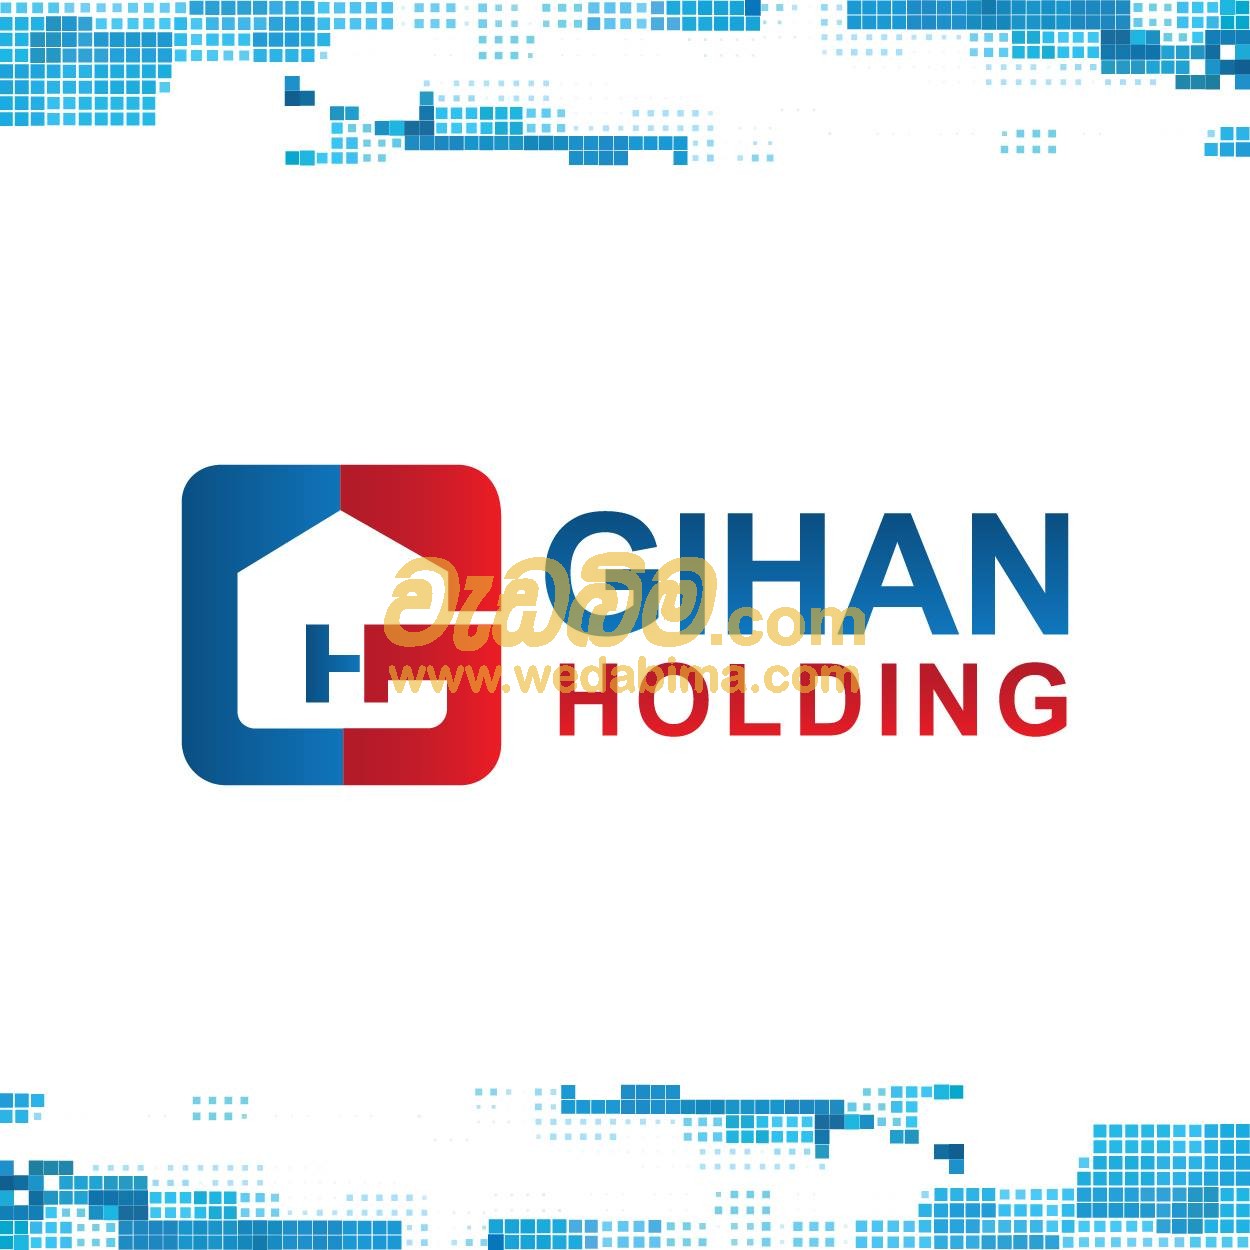 Gihan Holding